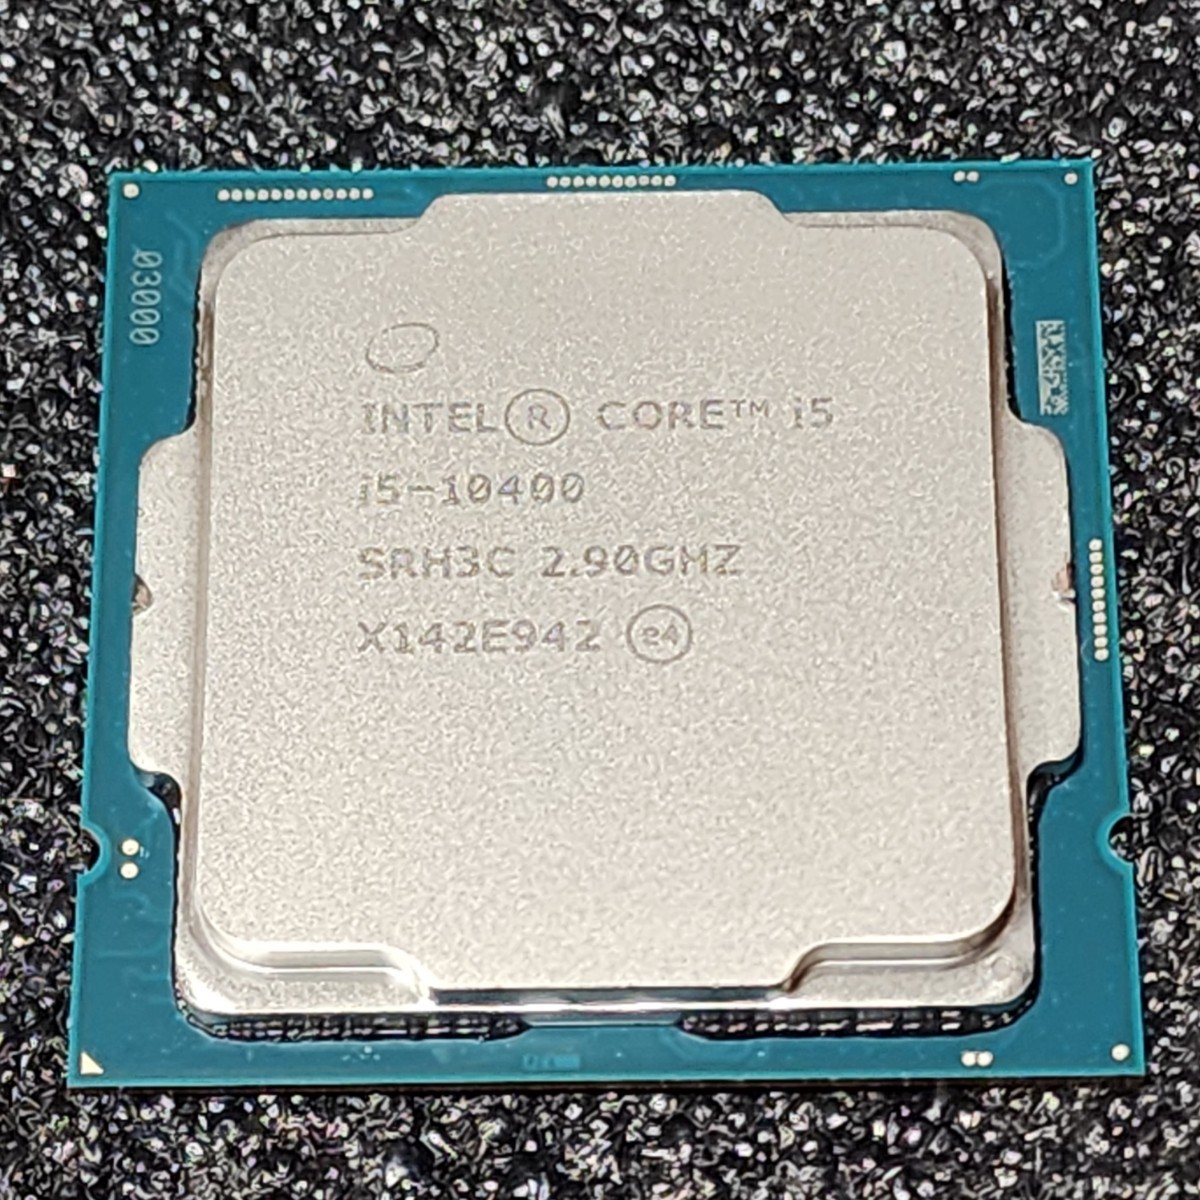  Intel Comet Lake Core i5-10400 2.90Ghz 12MB Cache CPU